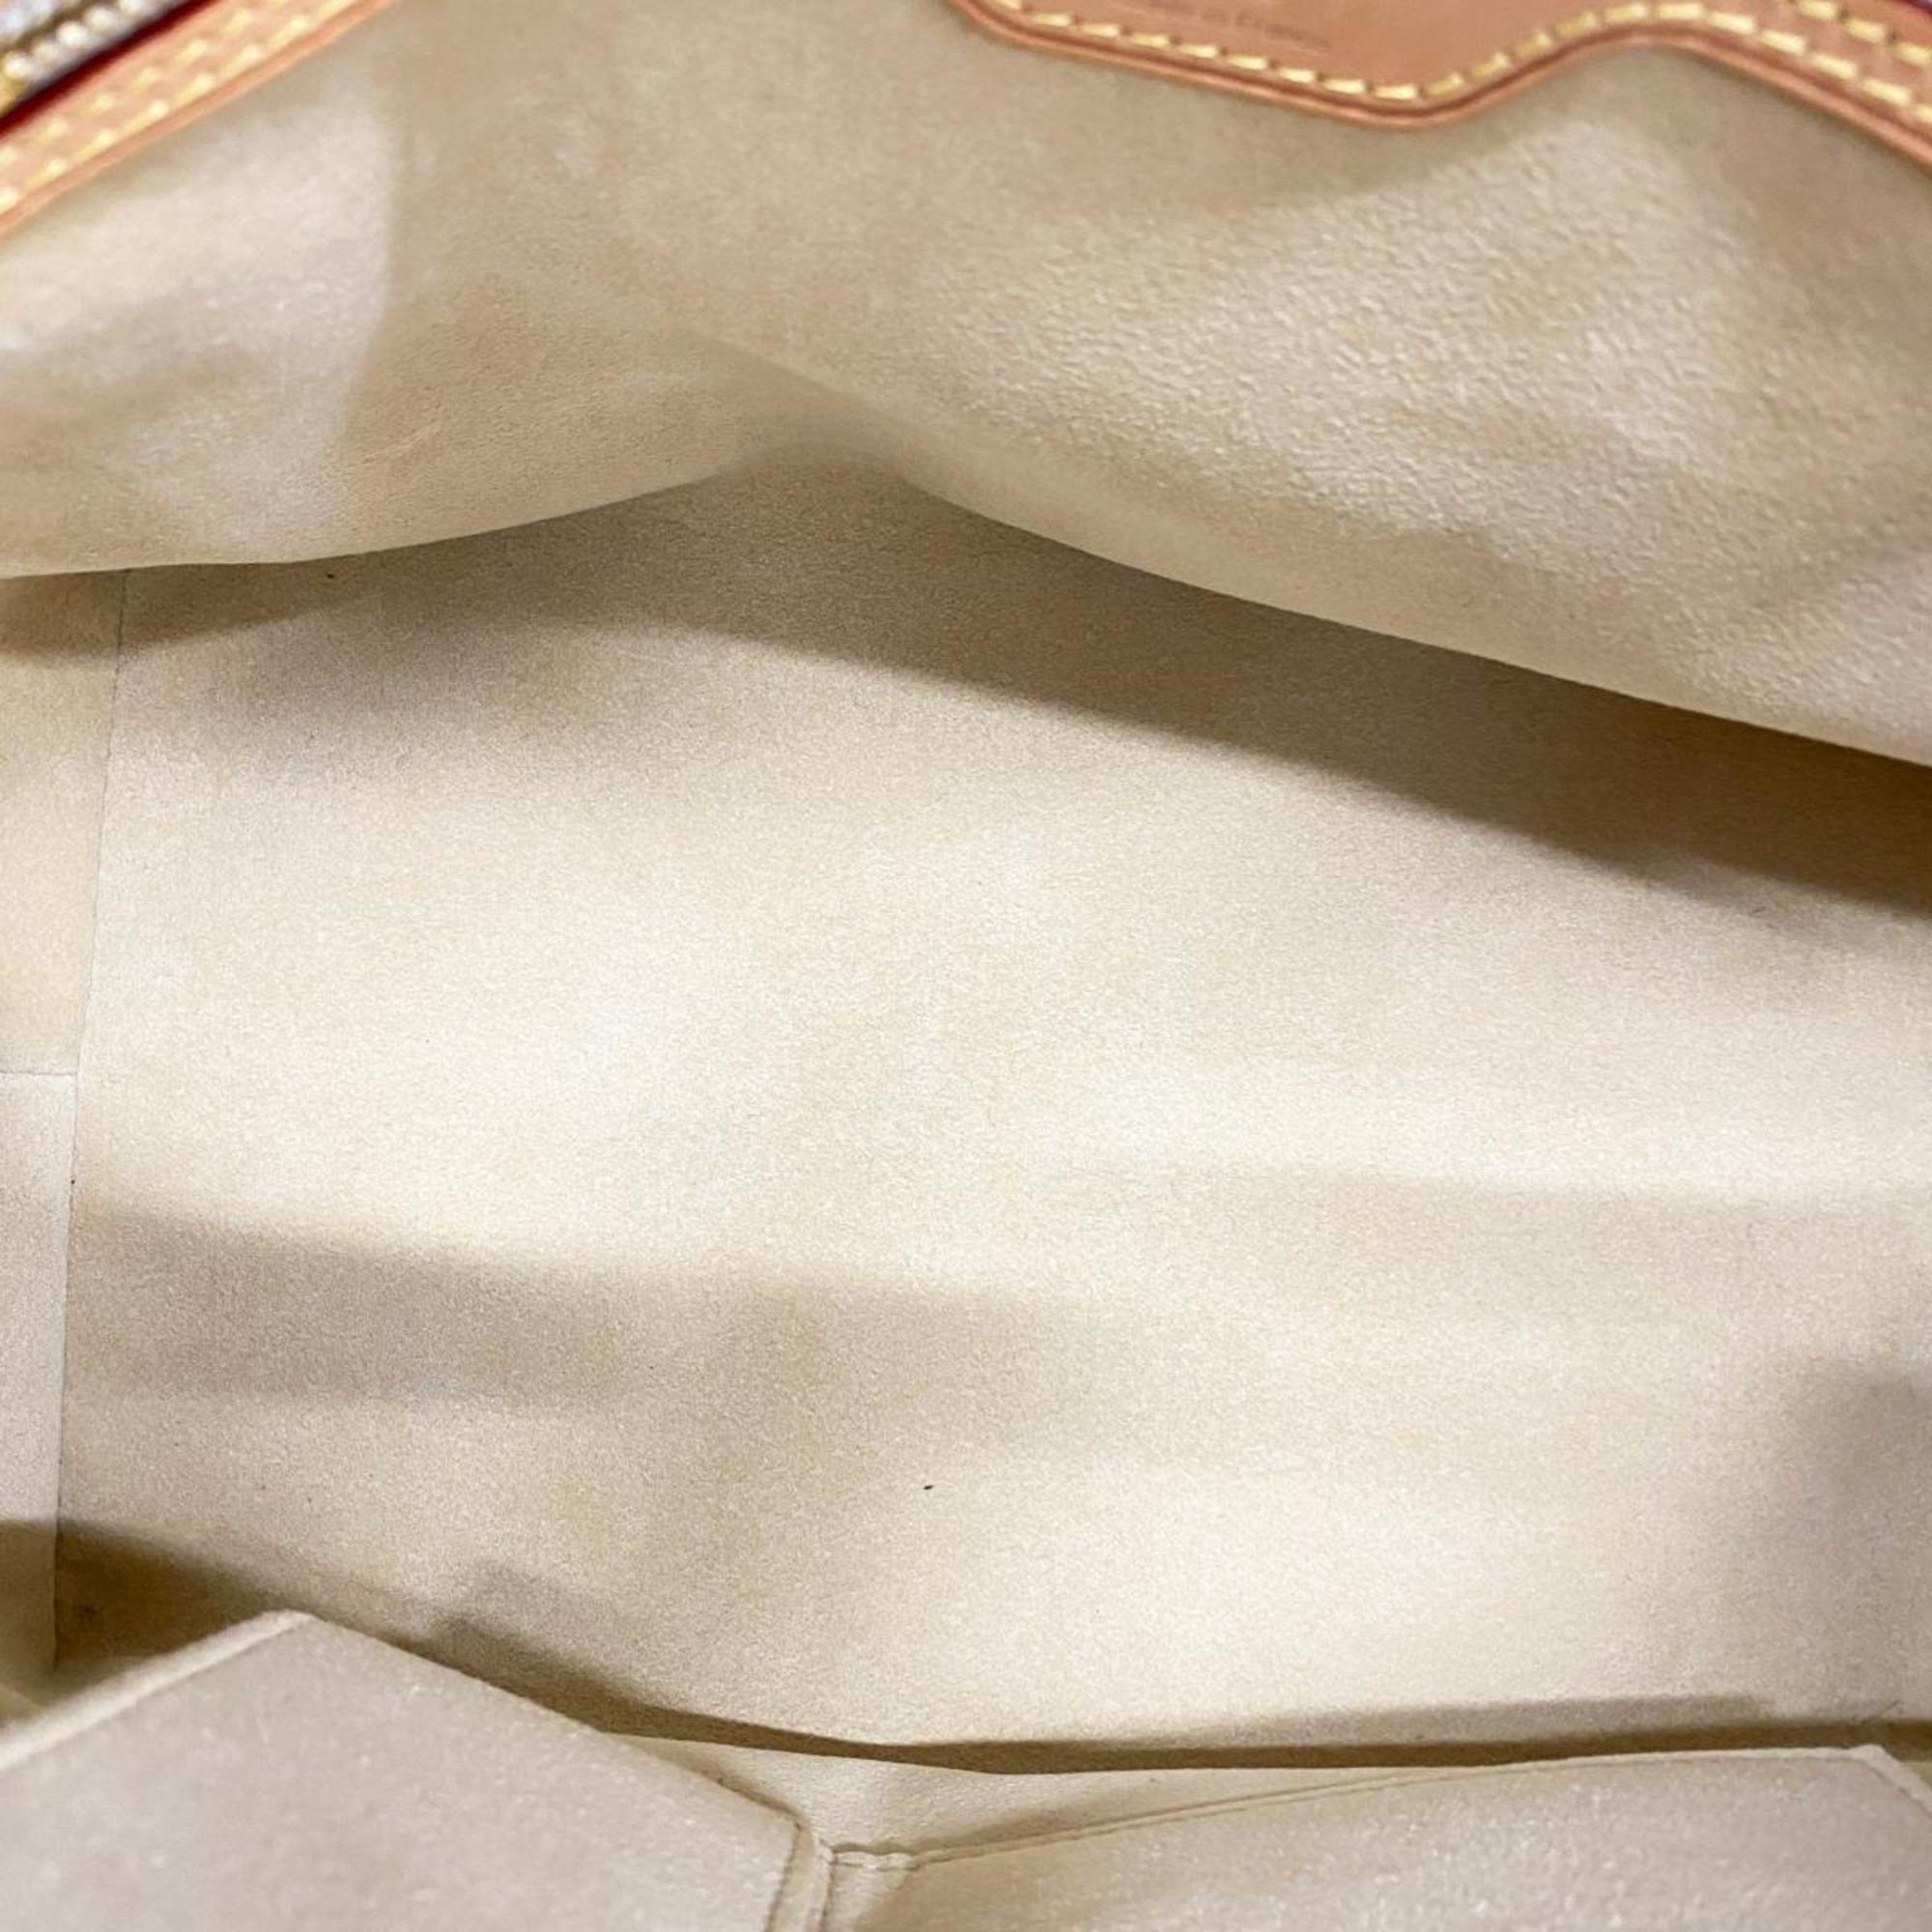 Louis Vuitton Tote Bag Damier Azur Hampstead PM N51207 White Women's